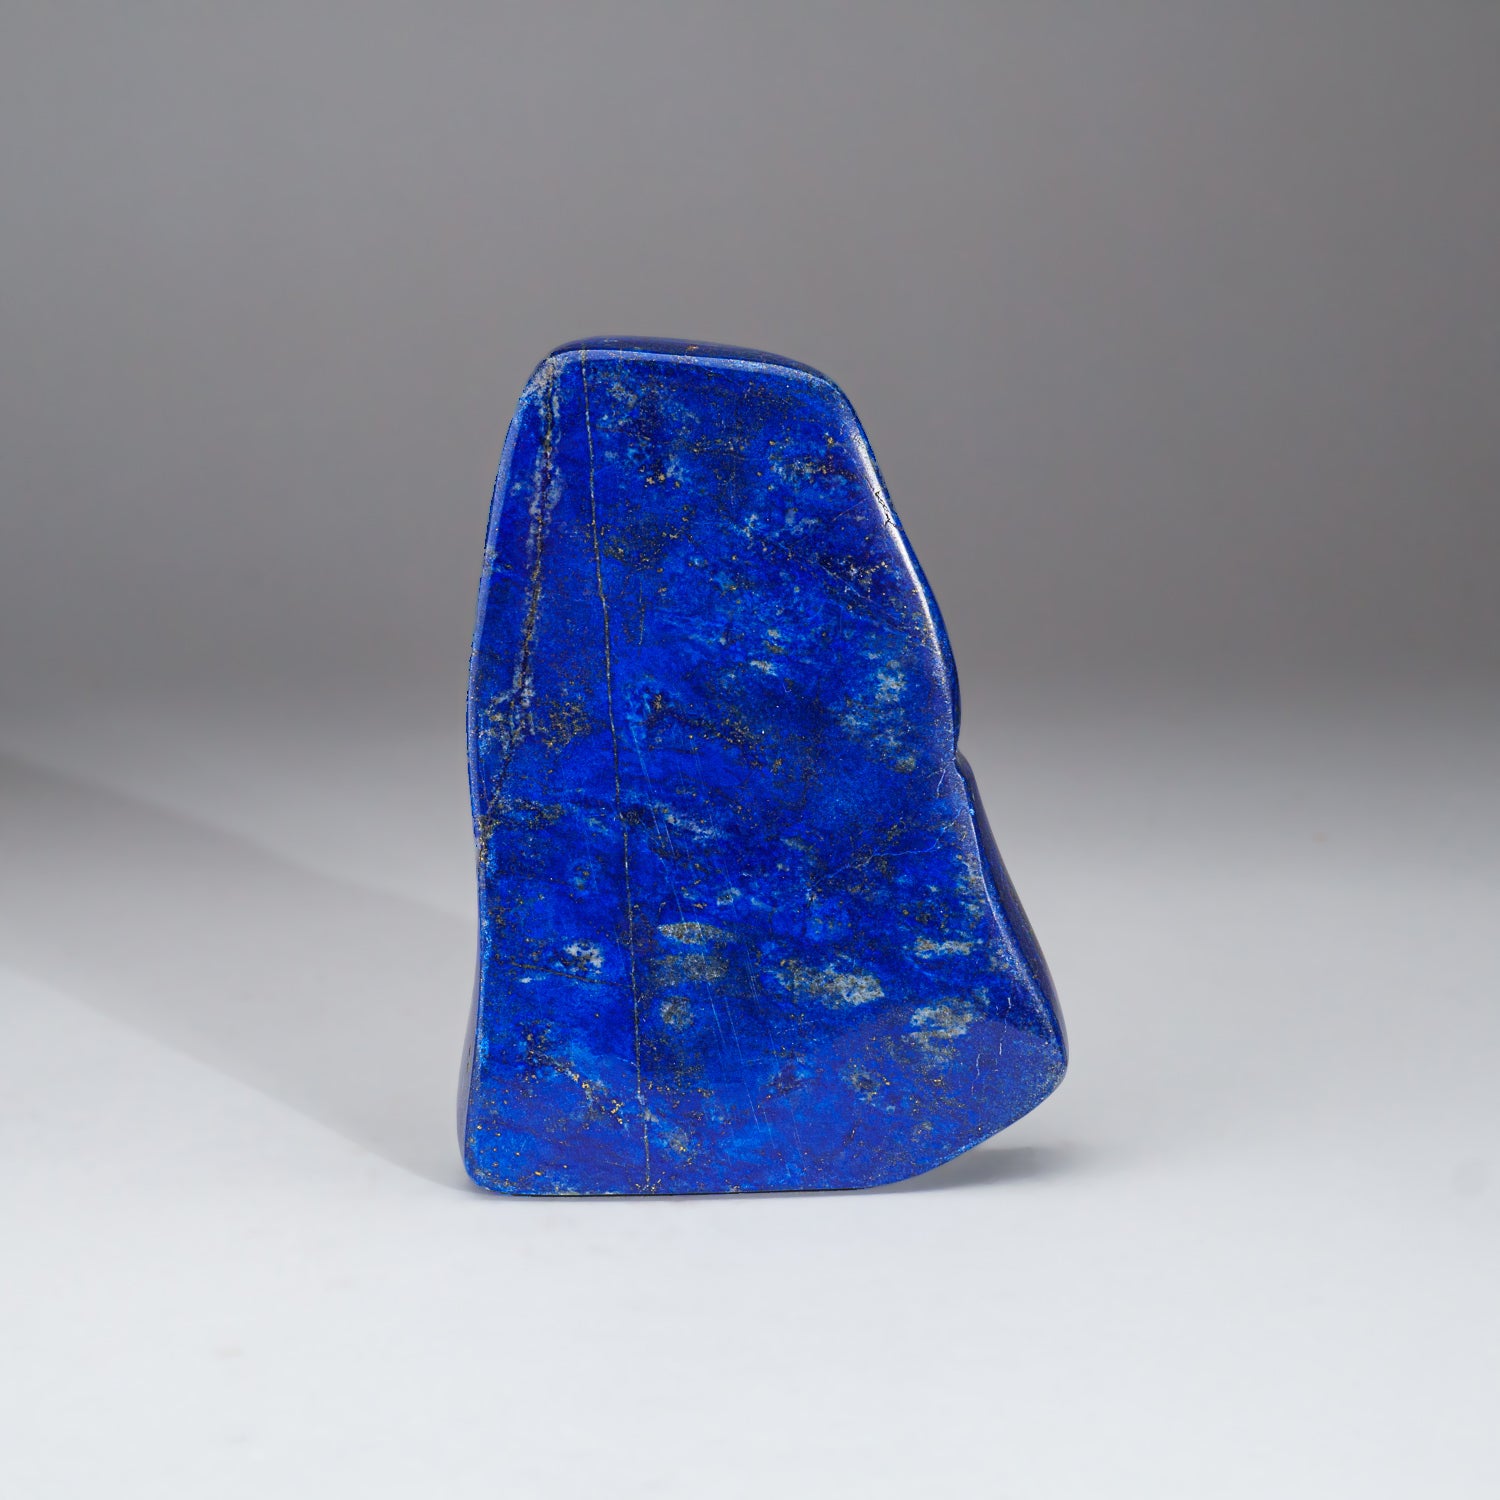 Polished Lapis Lazuli Freeform from Afghanistan (.9 lbs)